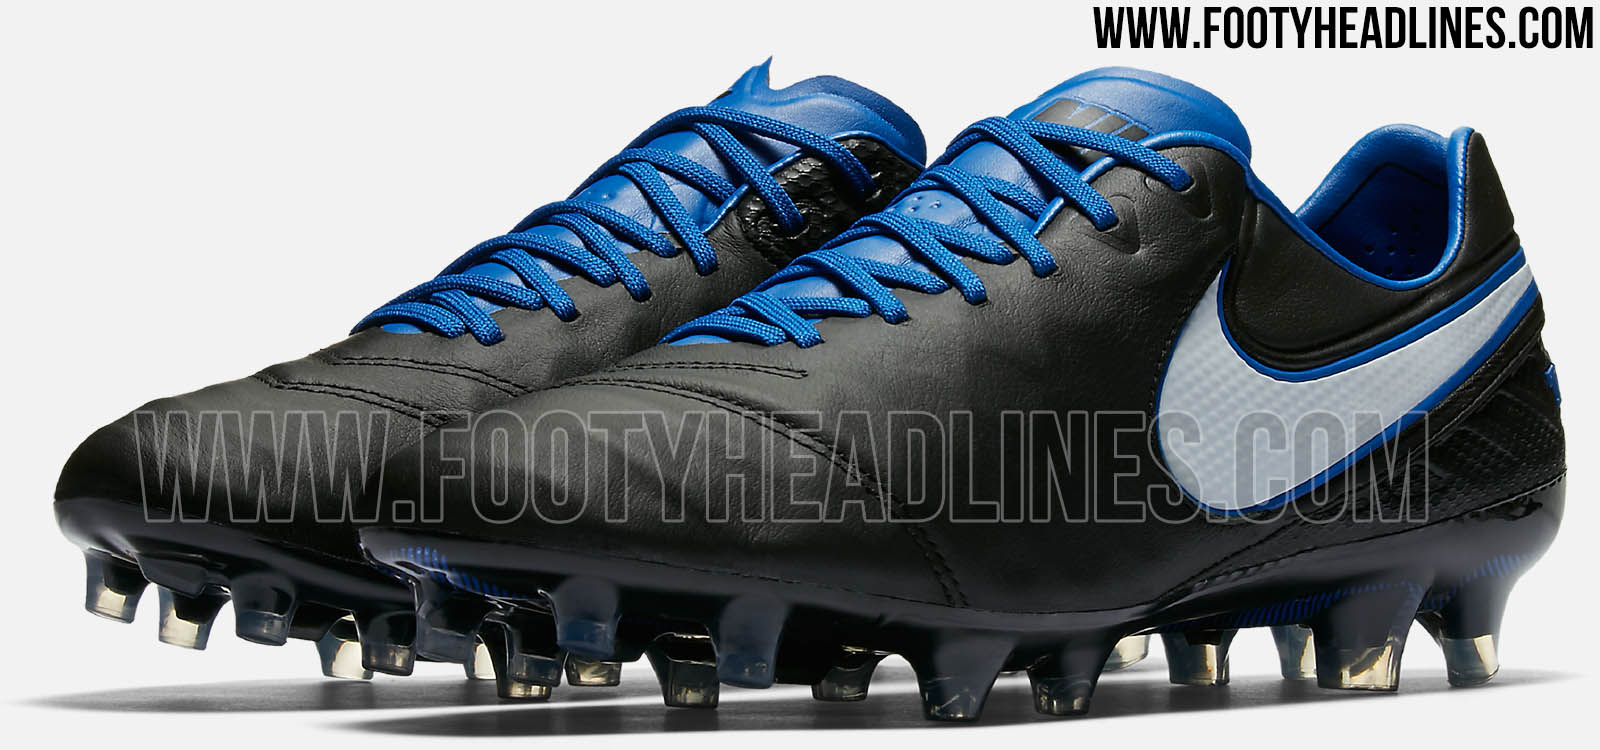 Black / Blue Nike Tiempo Legend VI Boots Released - Footy Headlines